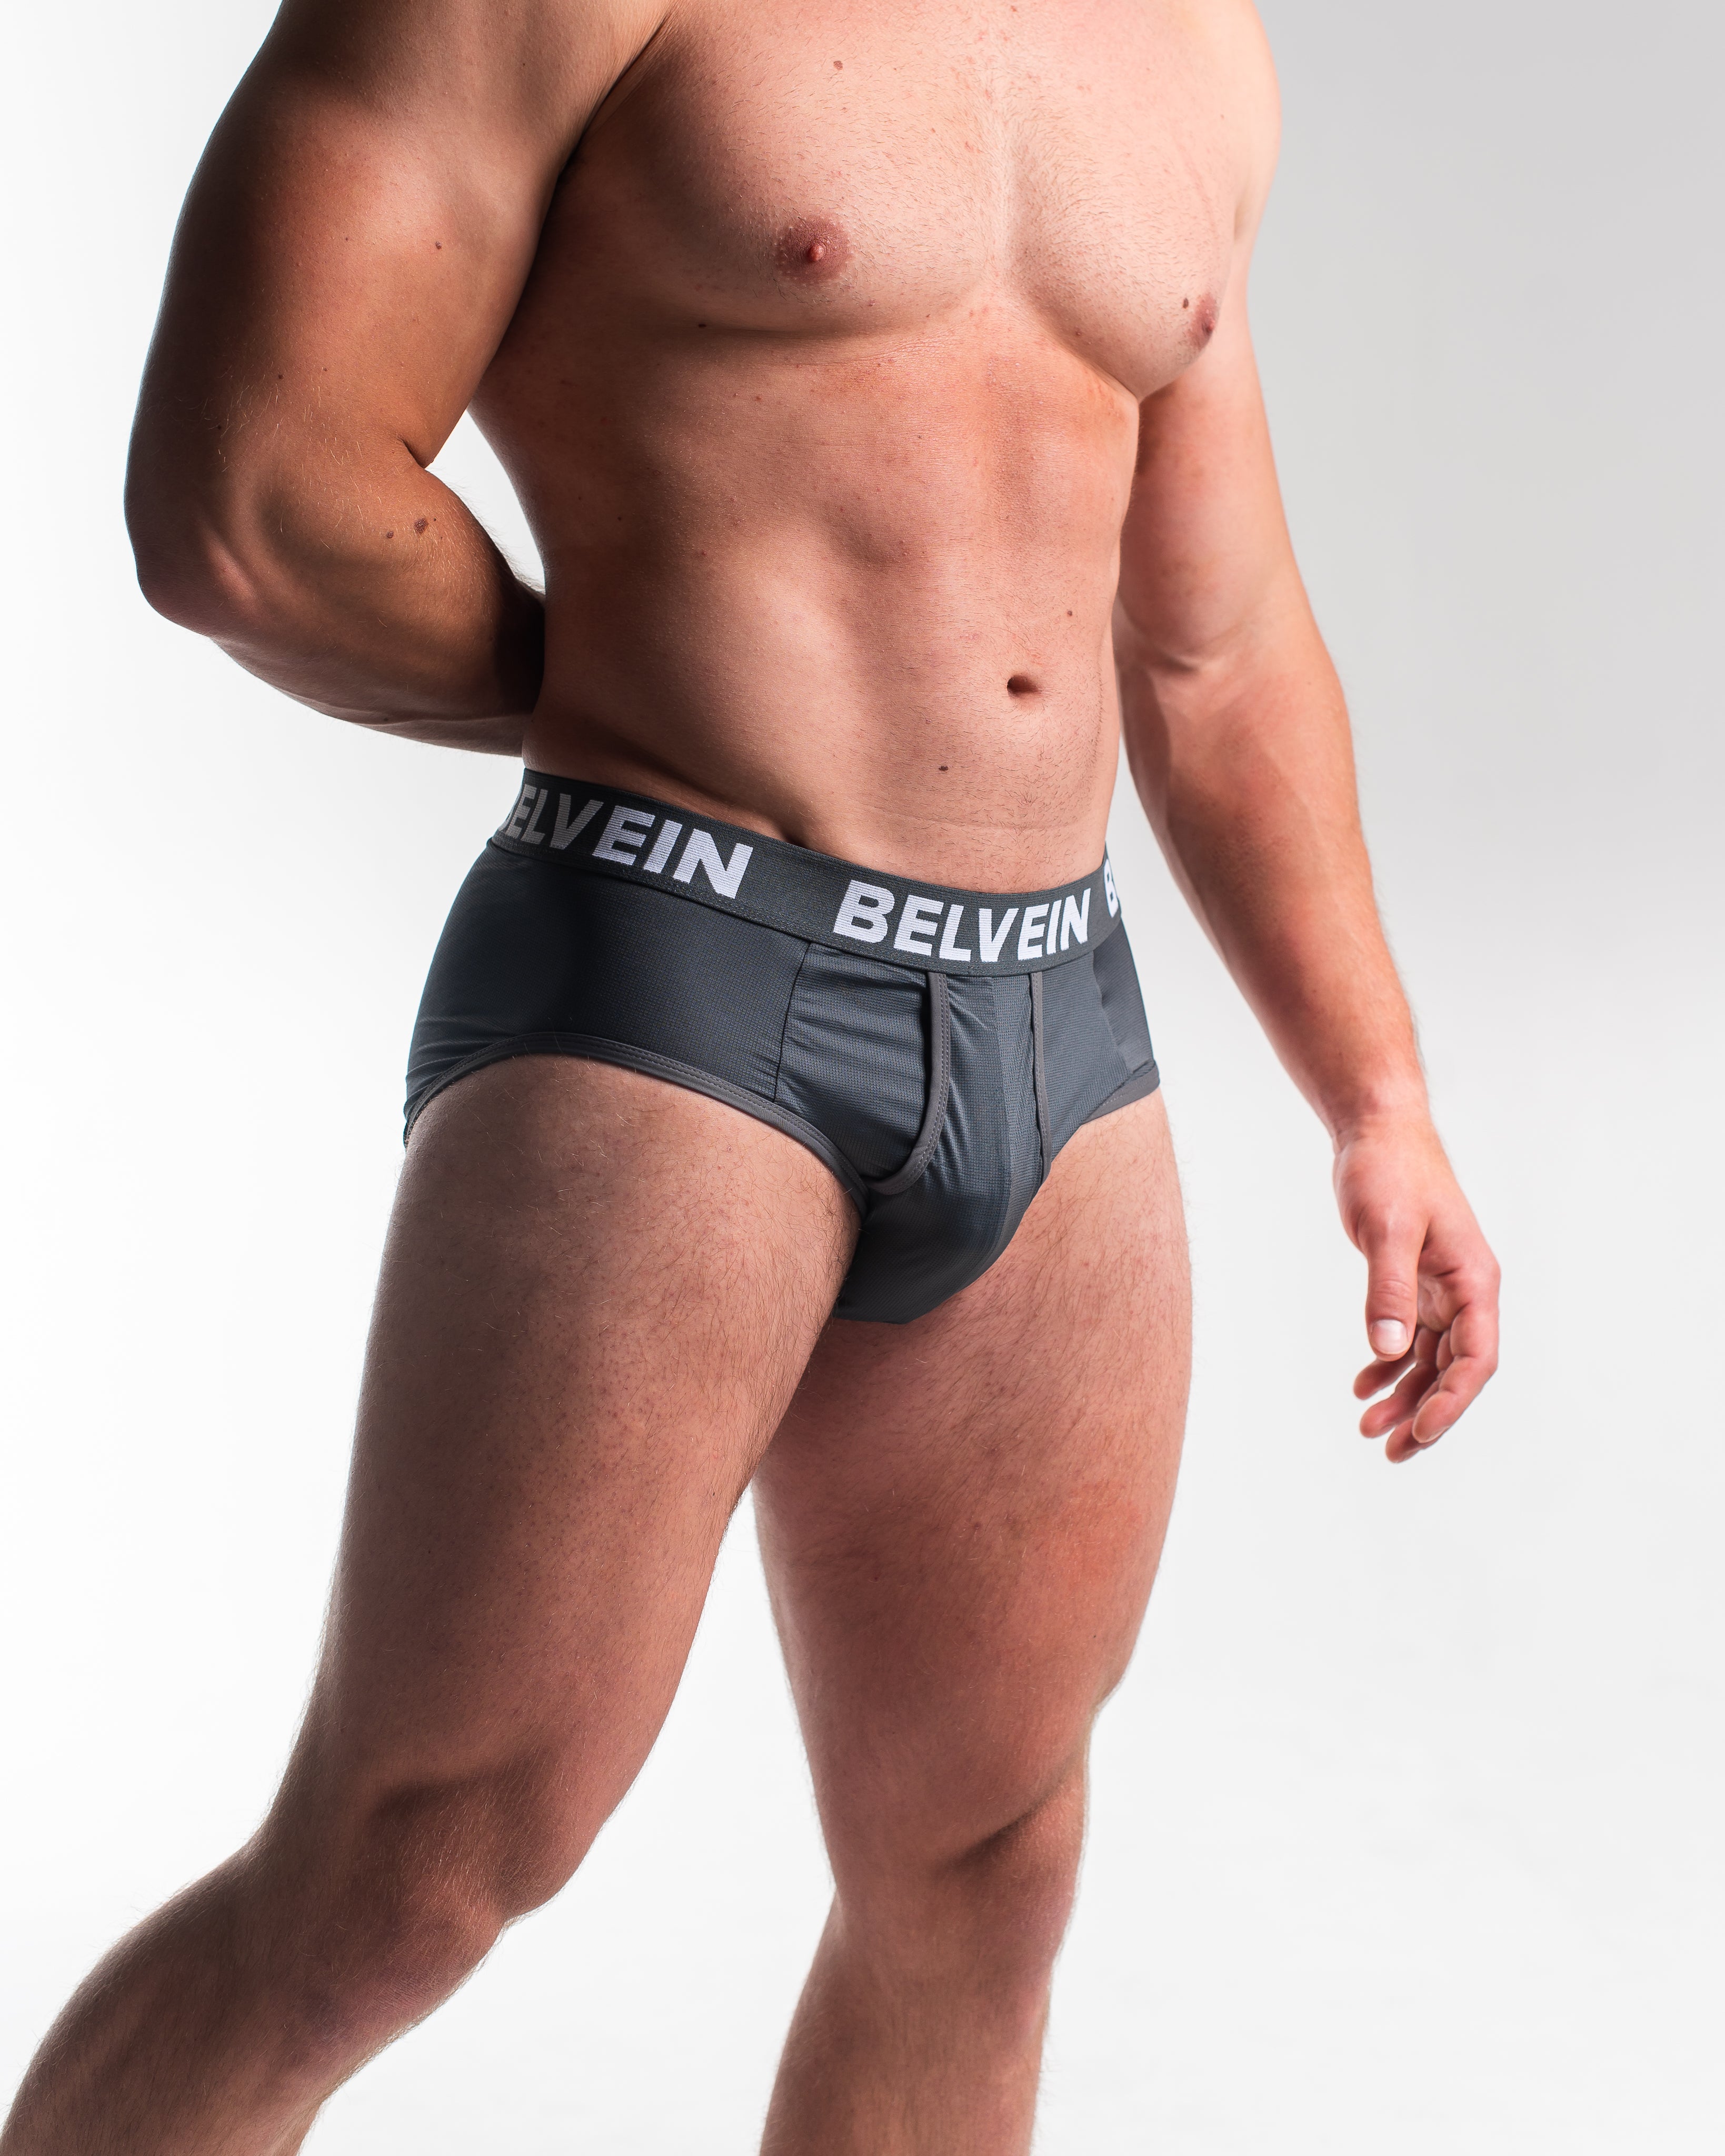 Men's Belvein Briefs Lead  Men's Lifting Underwear - A7